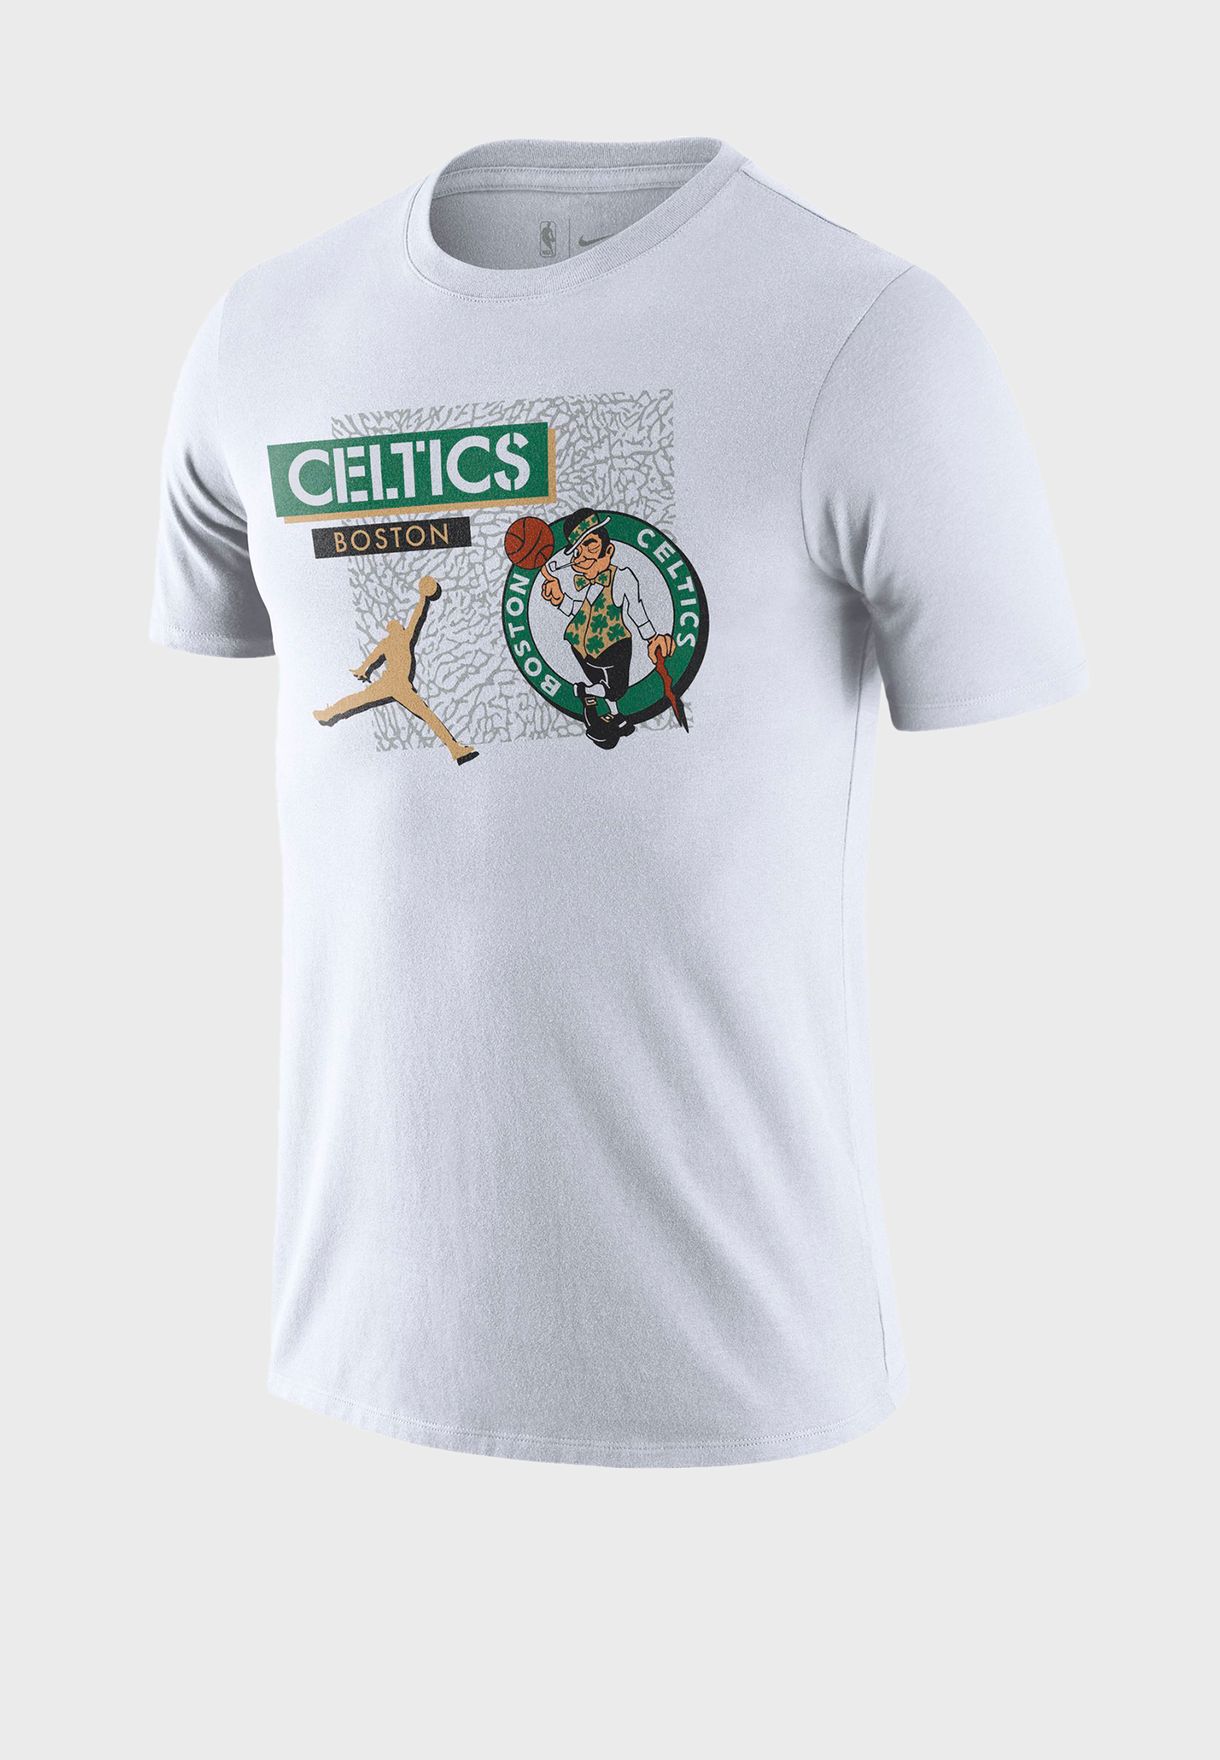 Celtics Statement T-Shirt